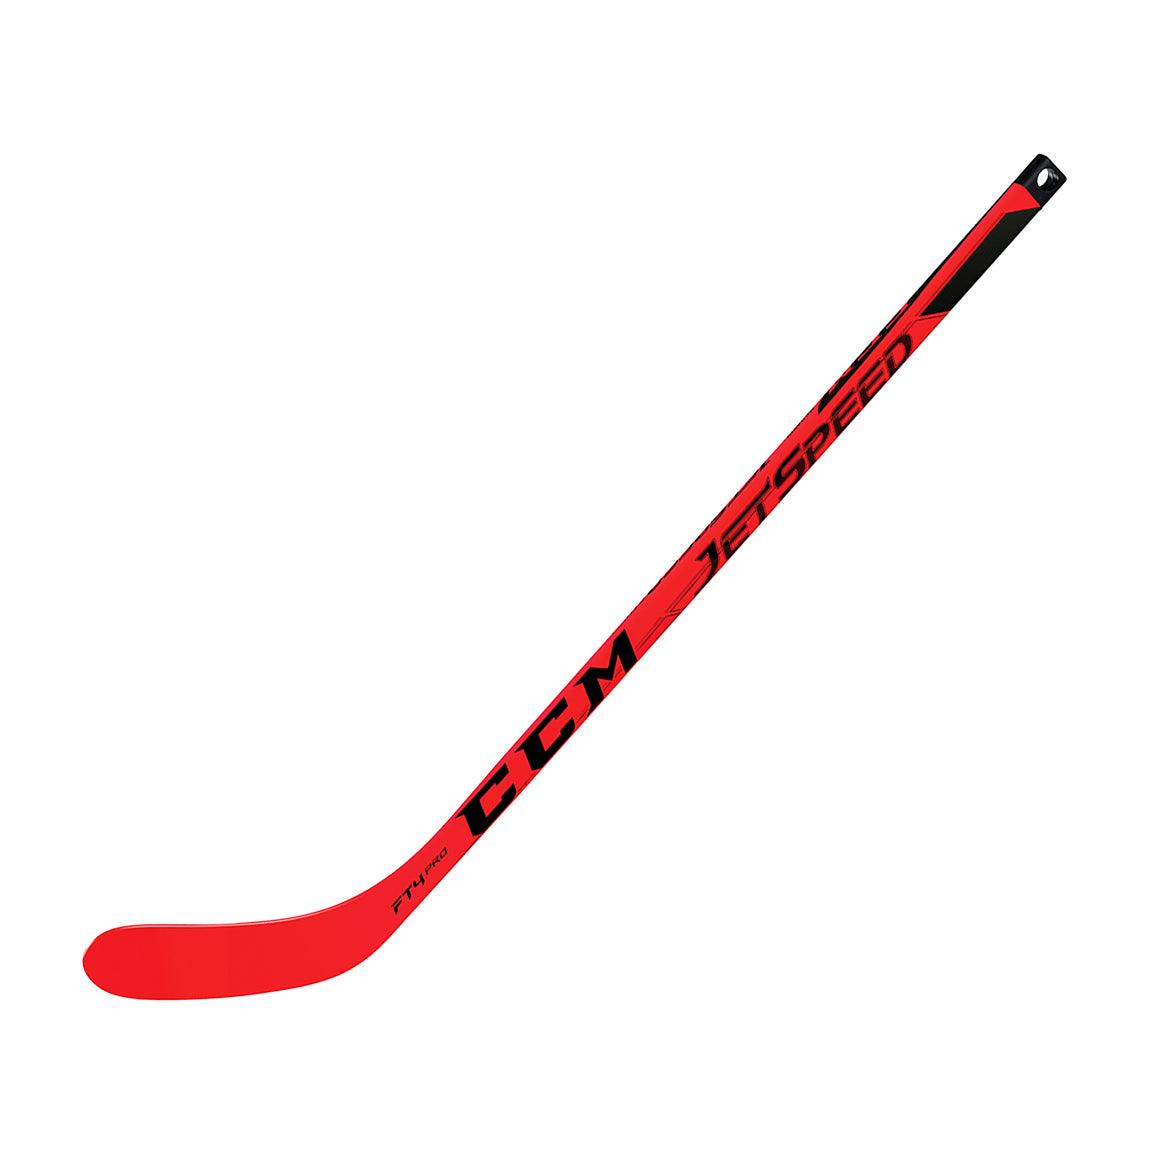 Mini Jetspeed FT4 Hockey Stick - Sports Excellence